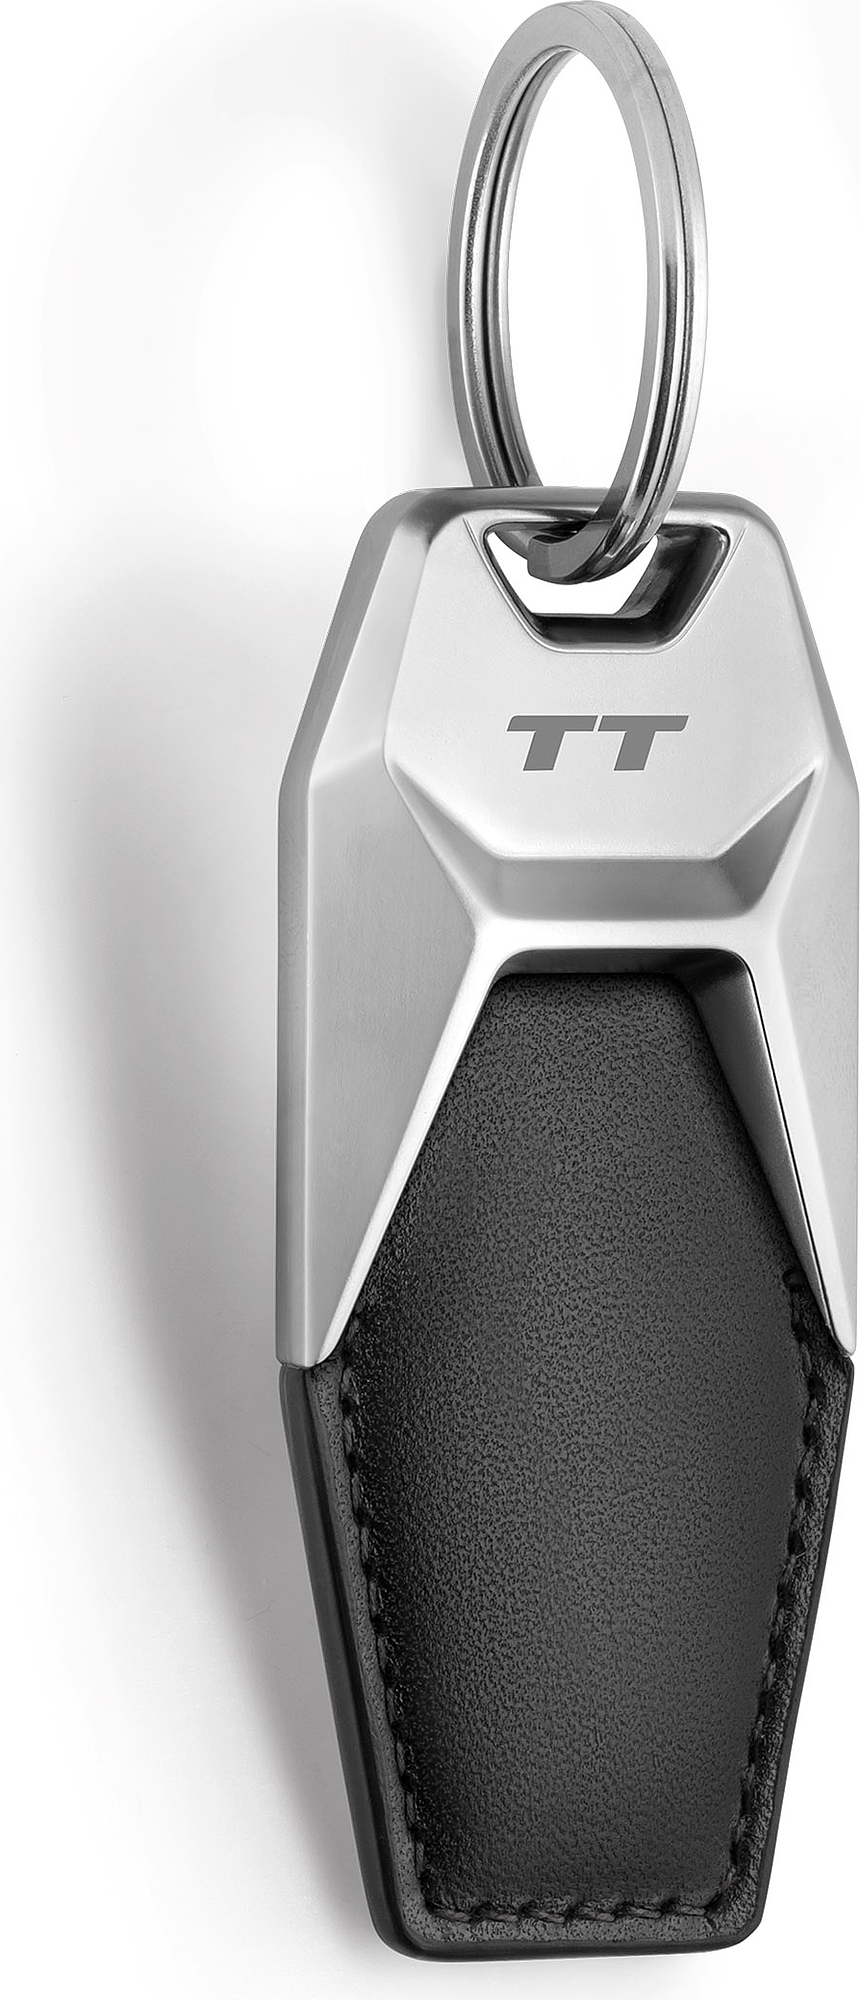 Porte-clés Audi TT, en étain